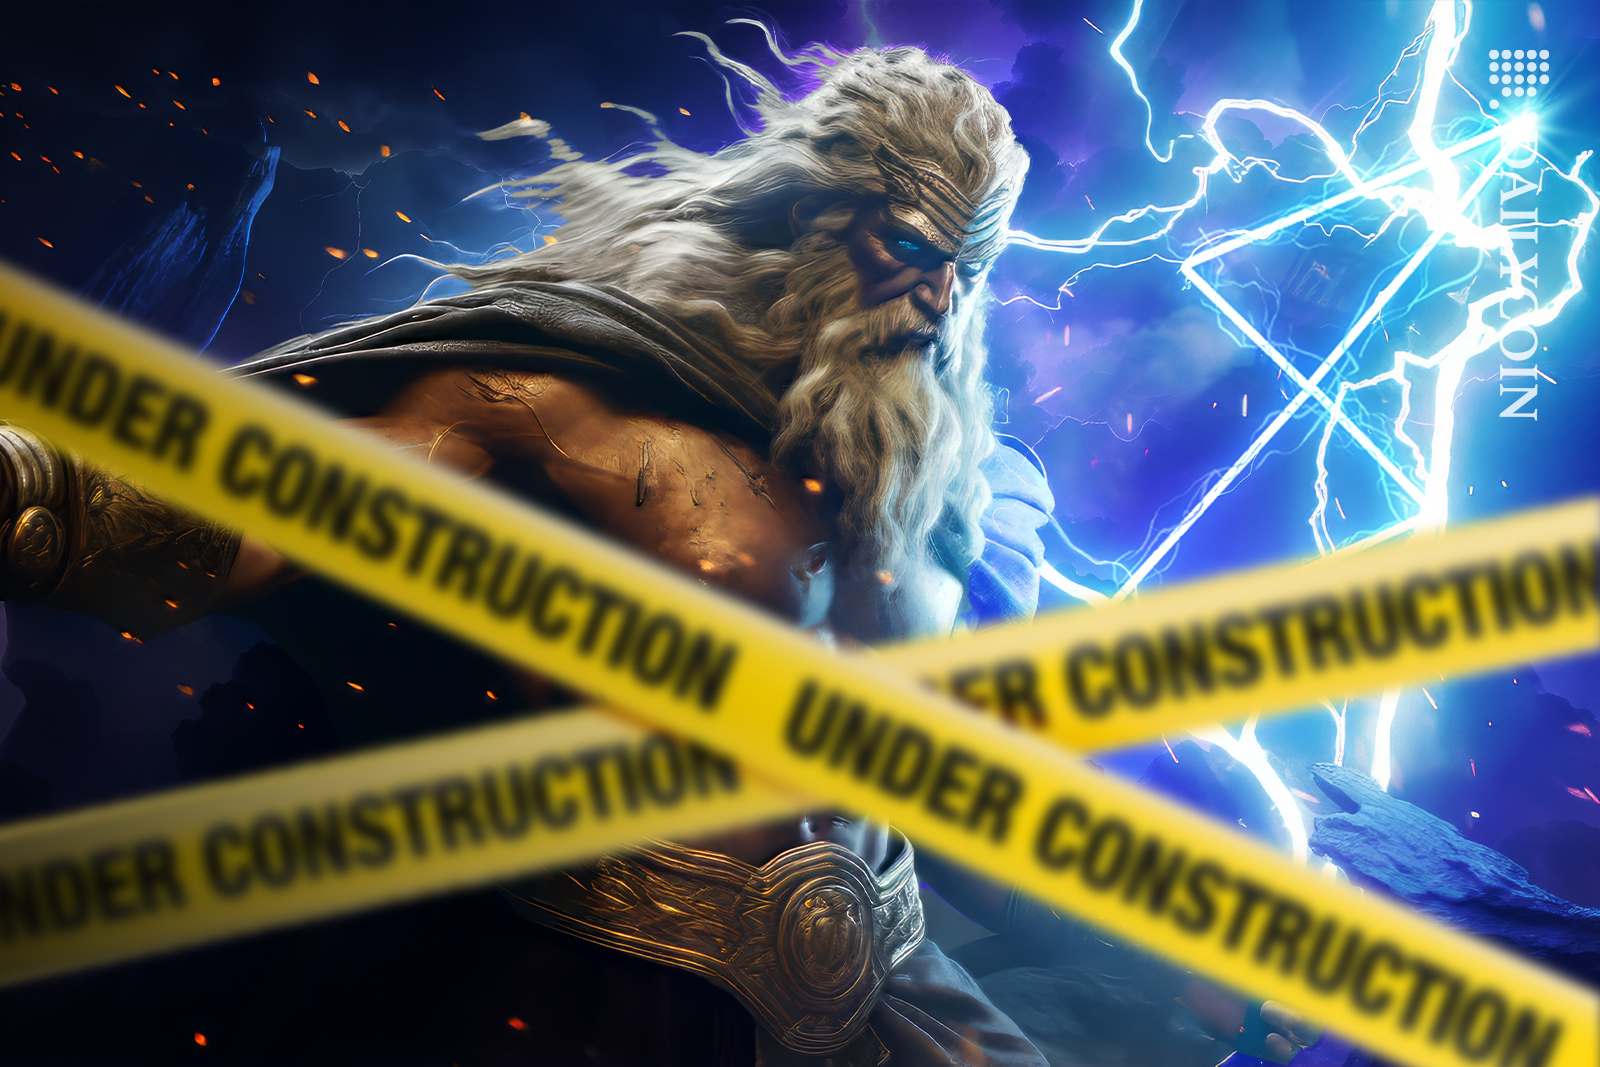 Thorswap is under construction.